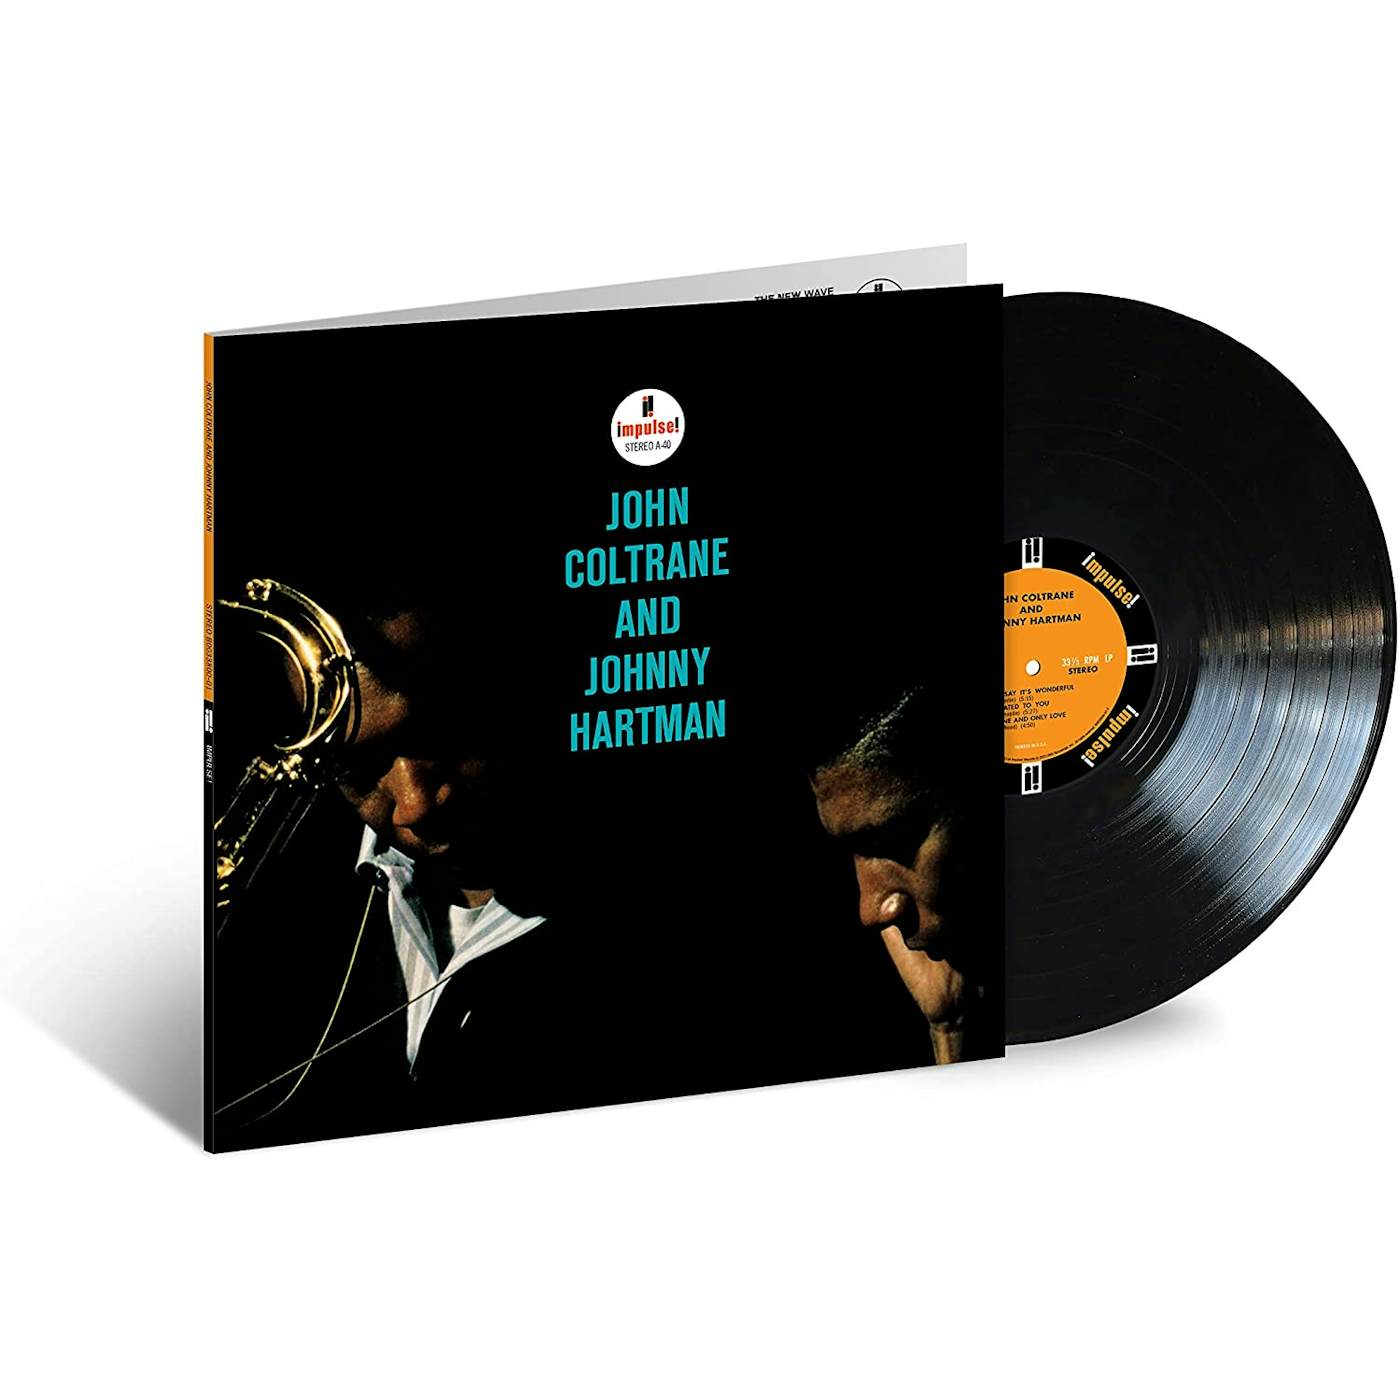 John Coltrane and Johnny Hartman - John Coltrane, Johnny Hartman (Acoustic Sounds series) (Vinyl)